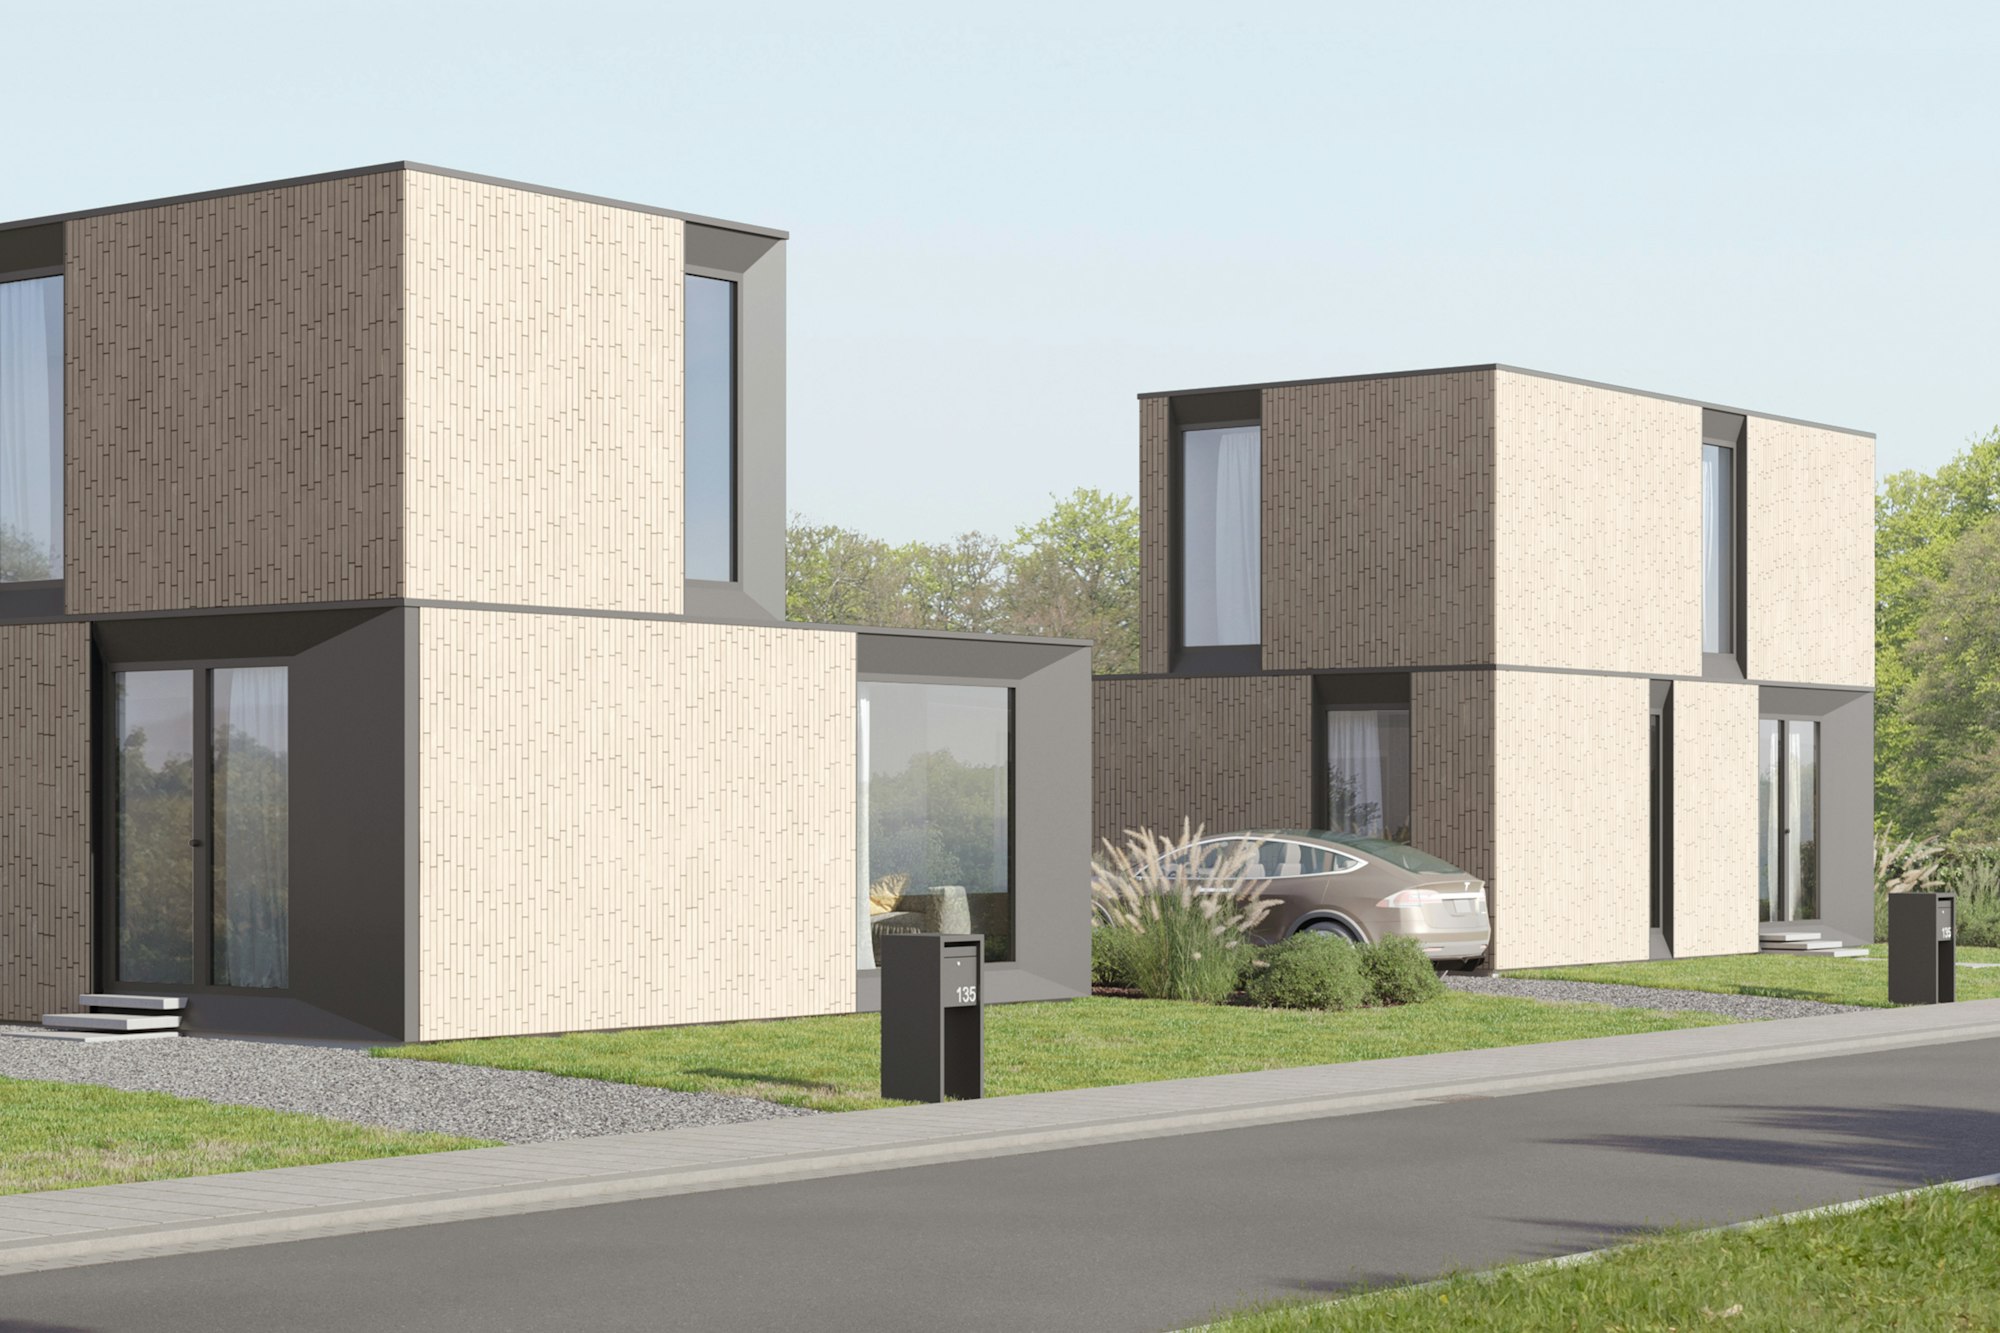 Skilpod #135 — houtskeletbouw woning met 3 slaapkamers, modern design met witte steen